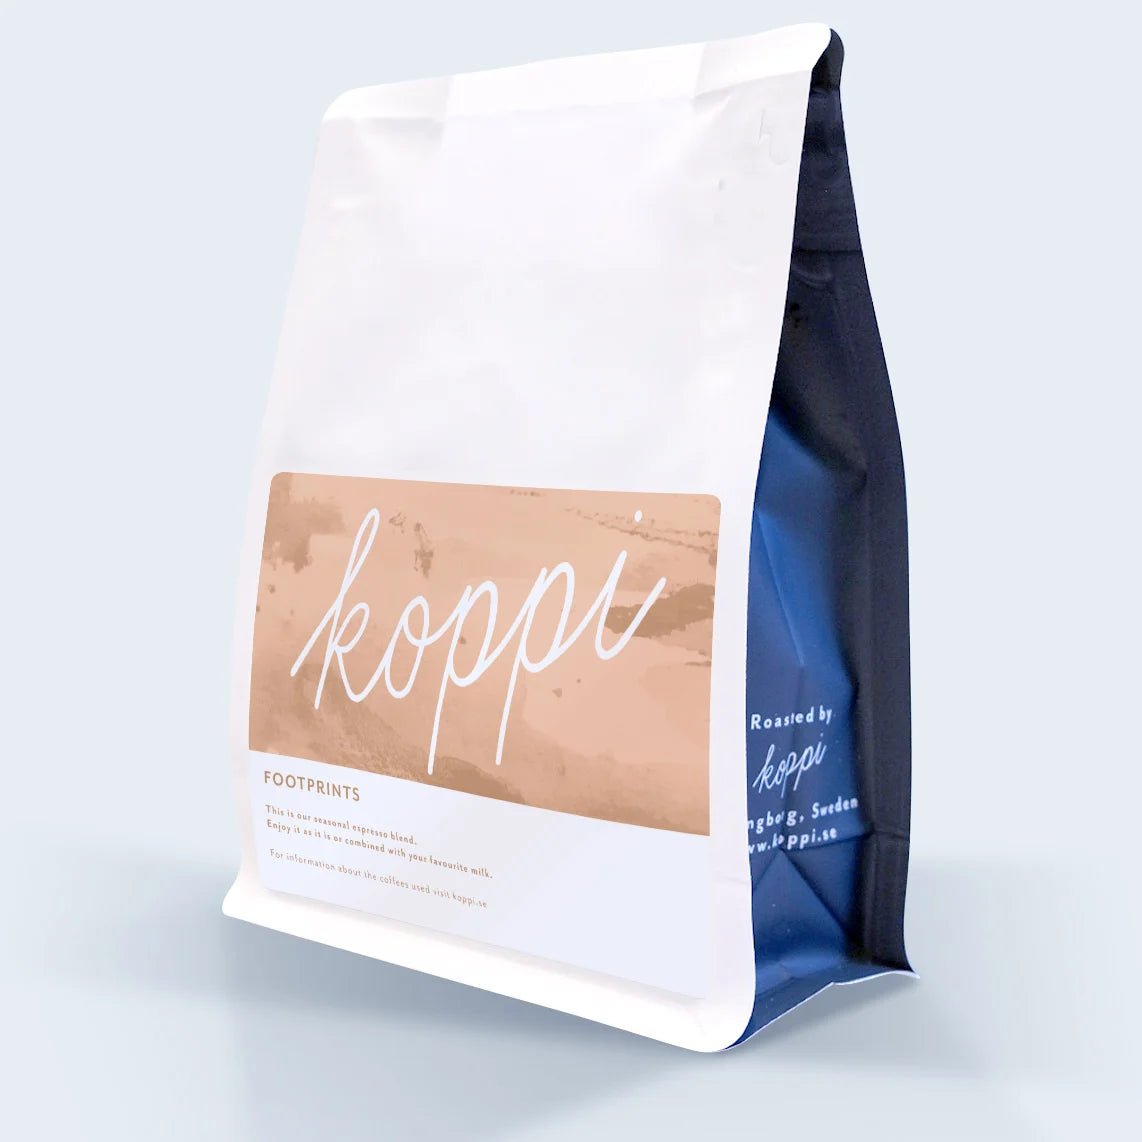 Espresso - Footprints -Espresso - Koppi Roasters